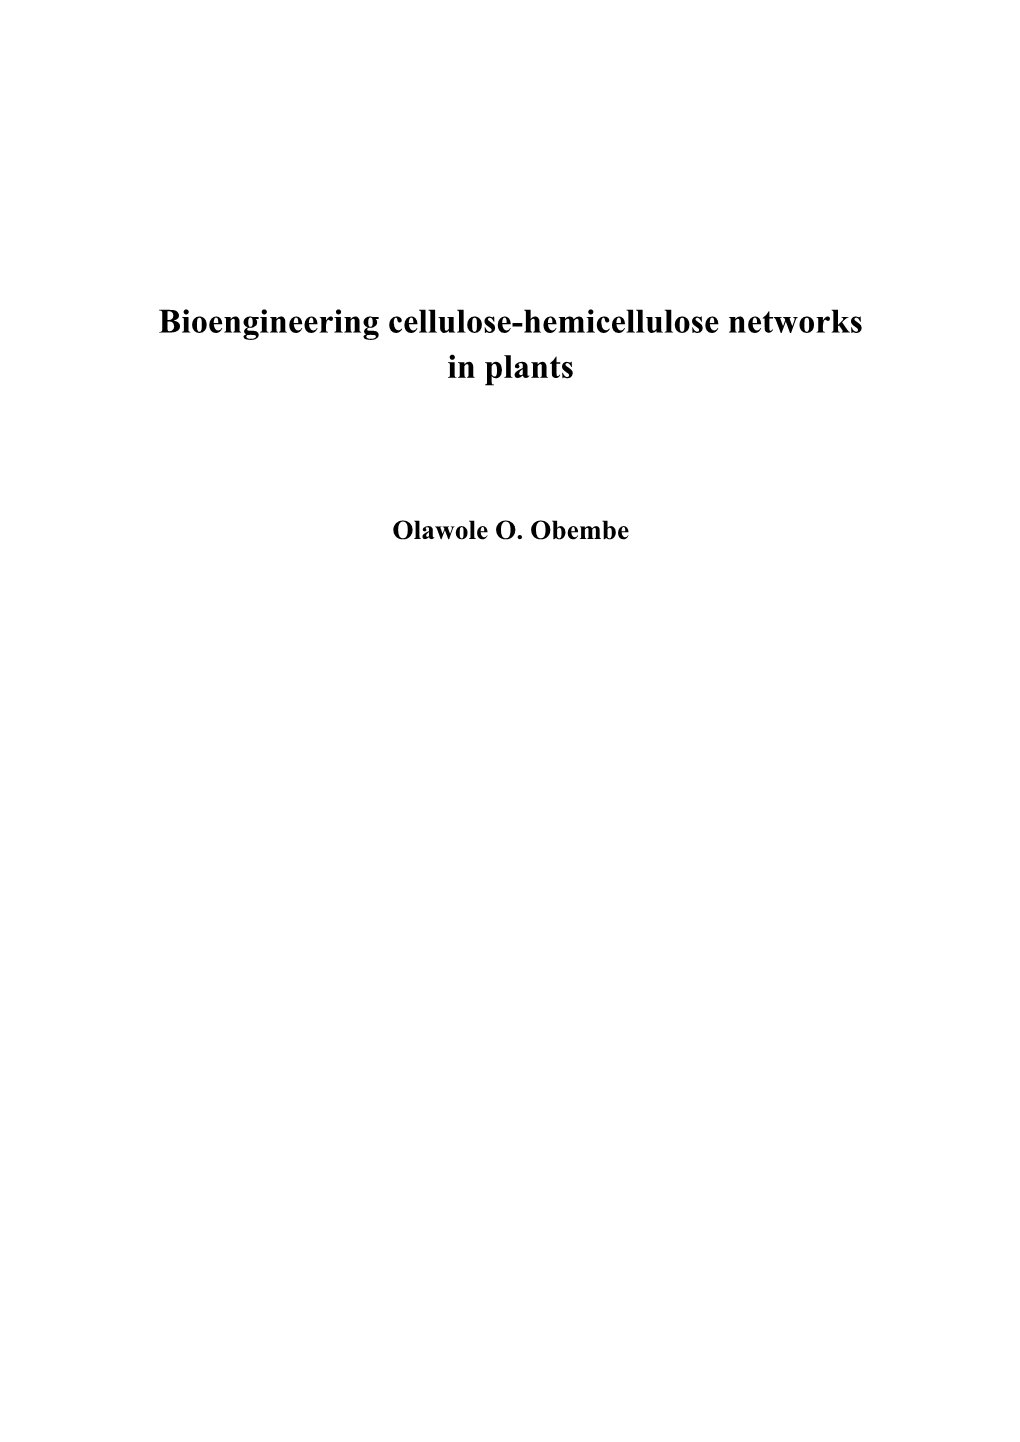 Bioengineering Cellulose-Hemicellulose Networks in Plants